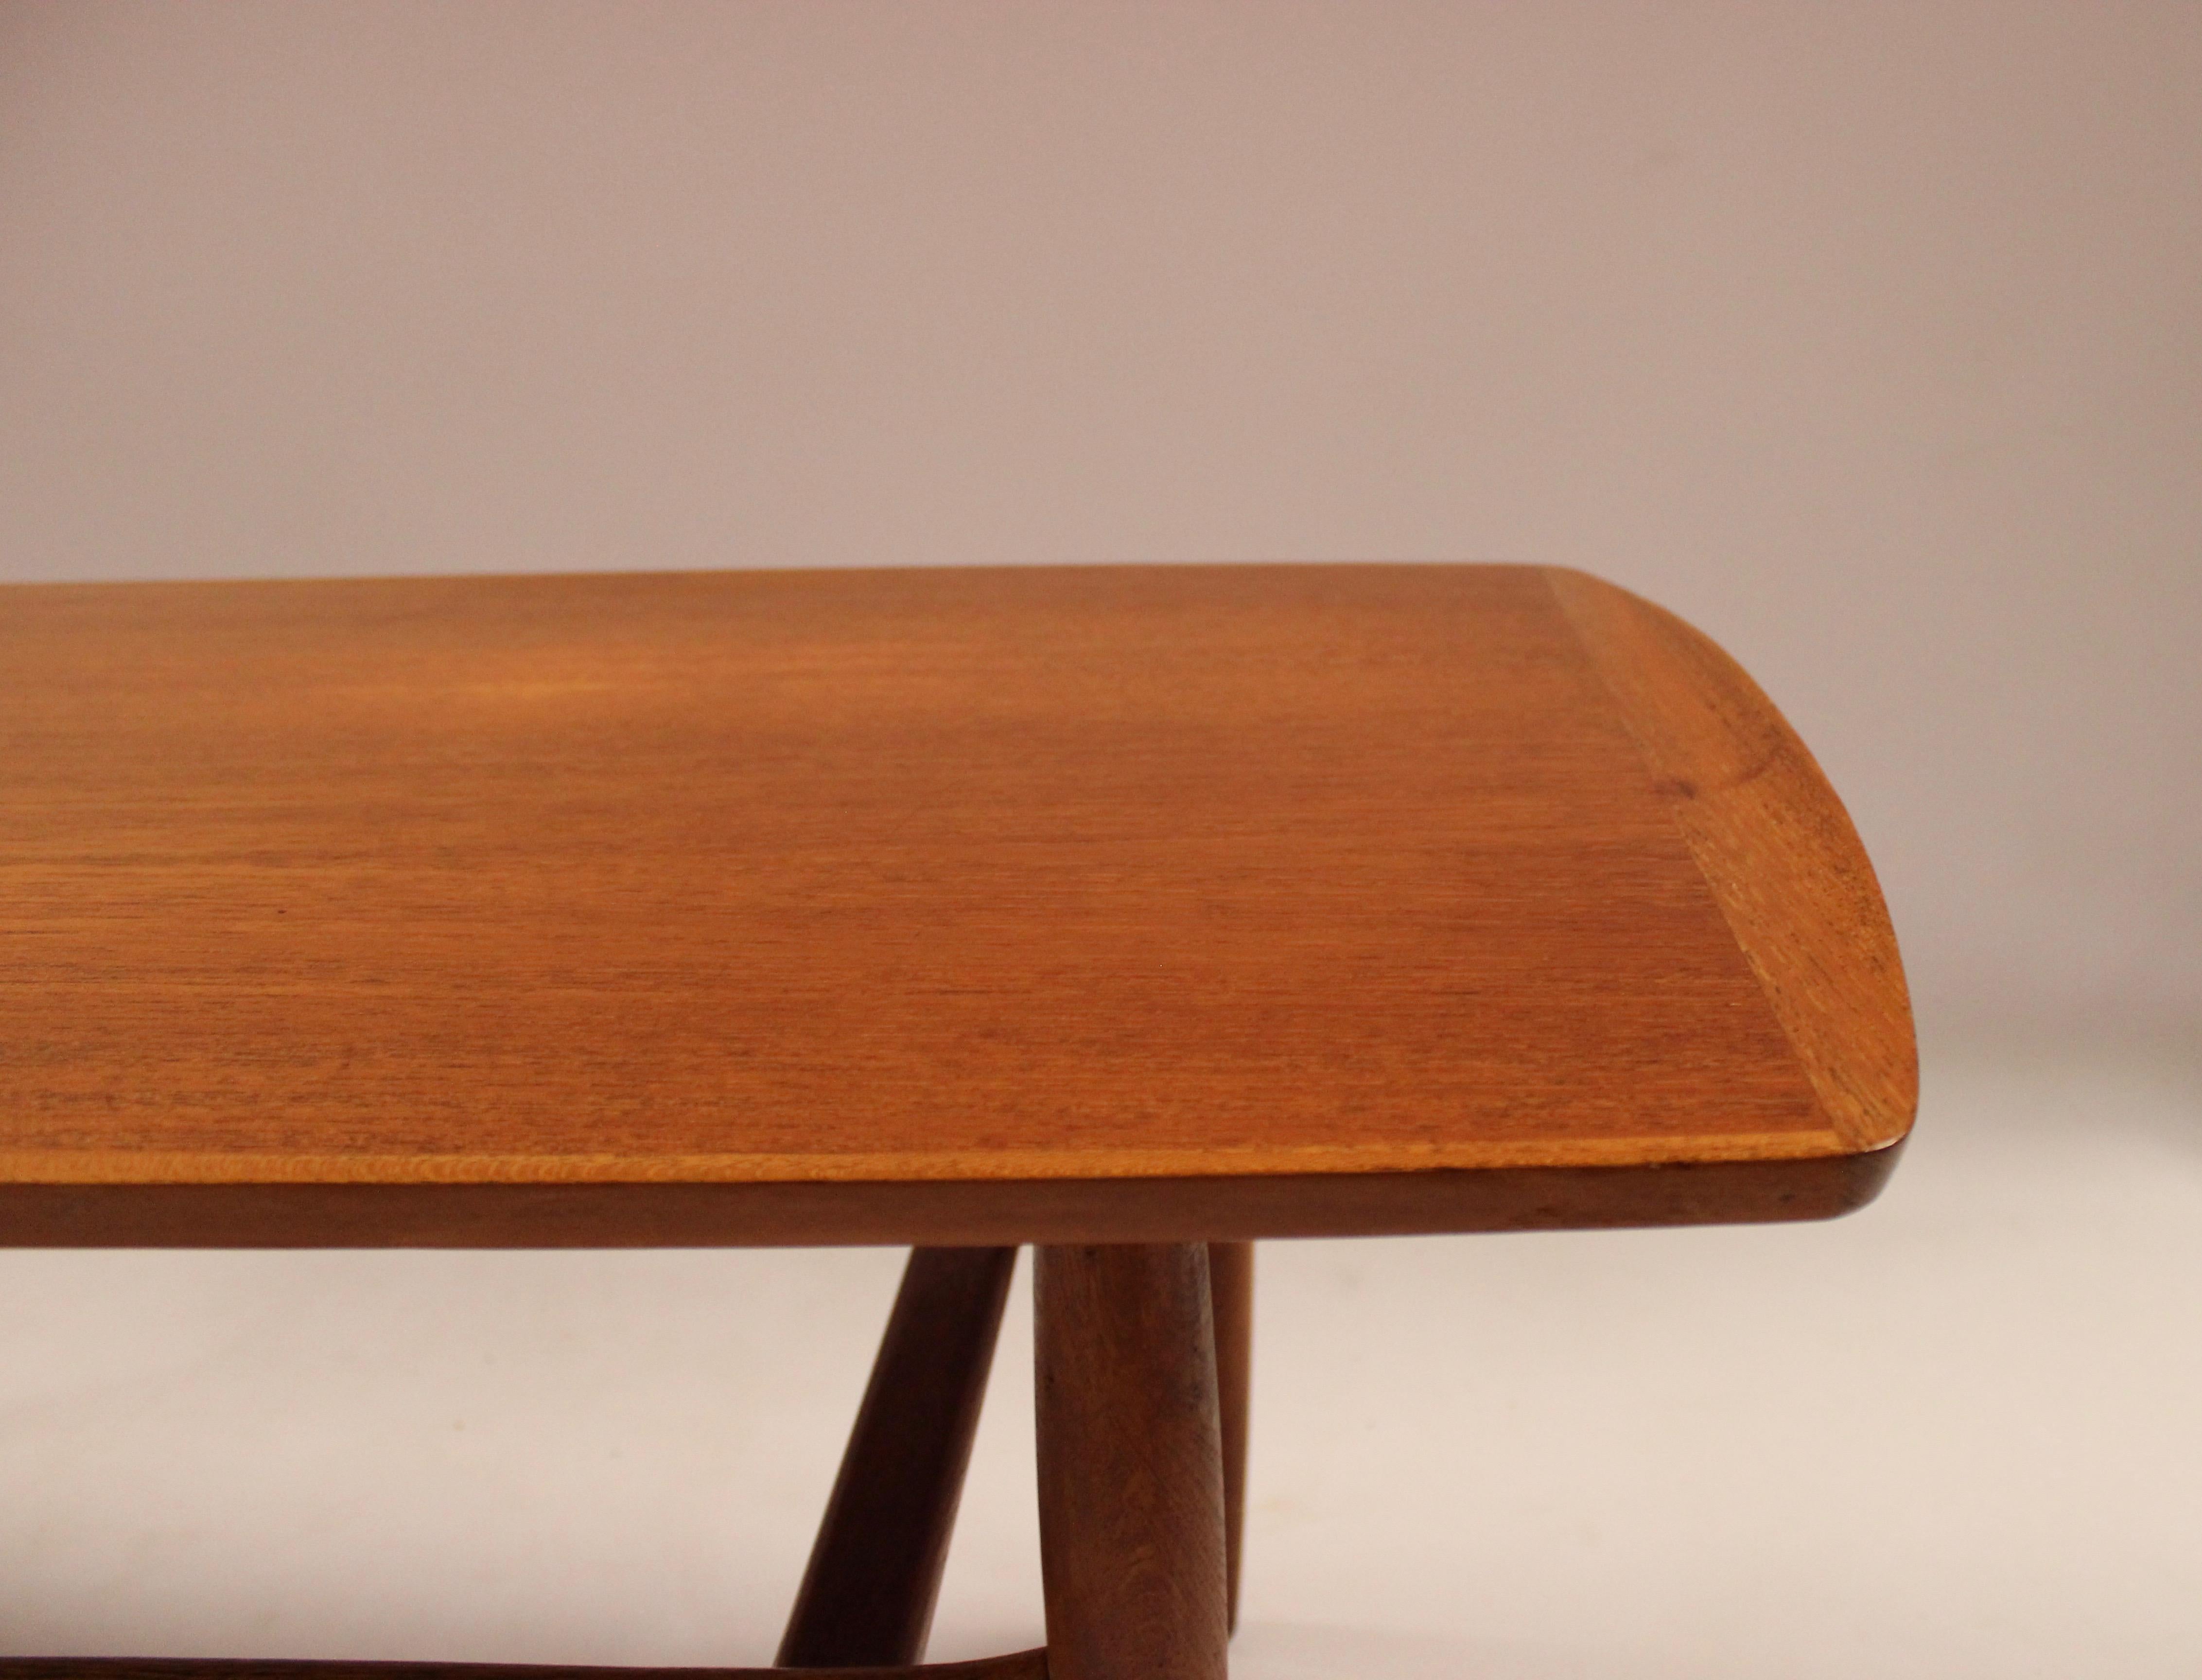 Scandinavian Modern Coffee Table in Teak of Danish Design, Manufactured by Jason Furniture, 1960s For Sale